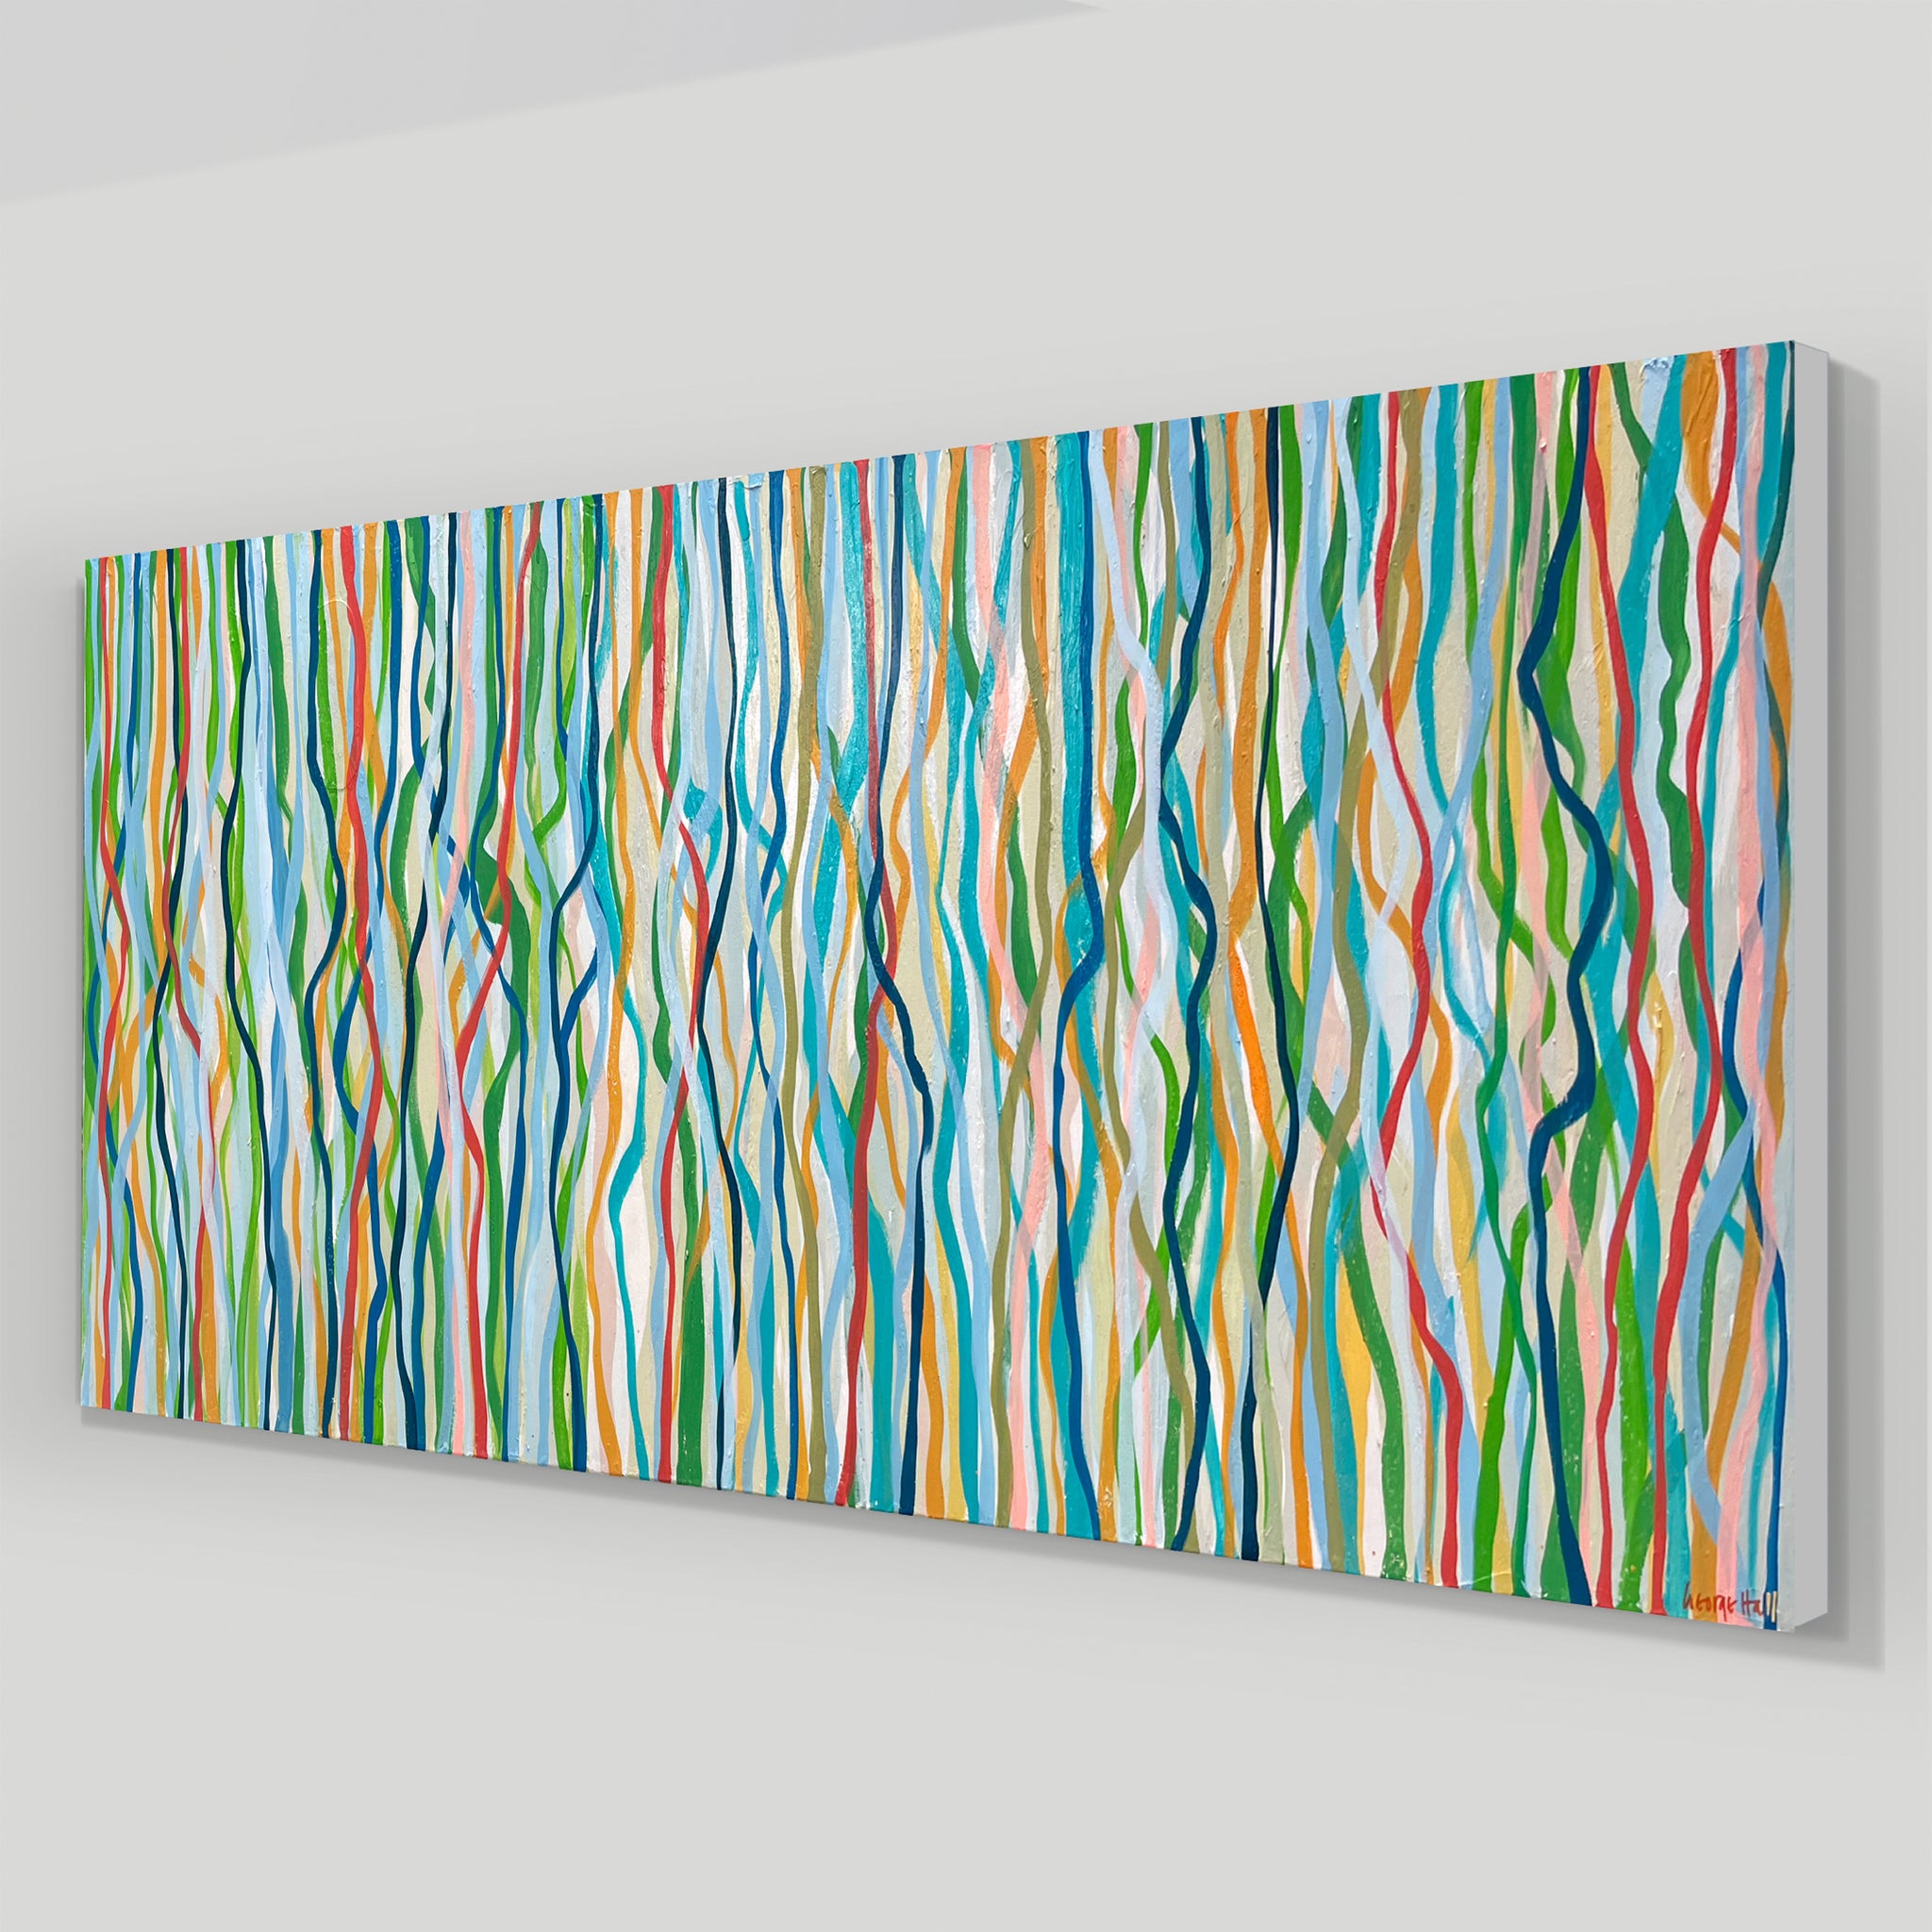 Tropic Funk- 200 x 85cm acrylic on canvas